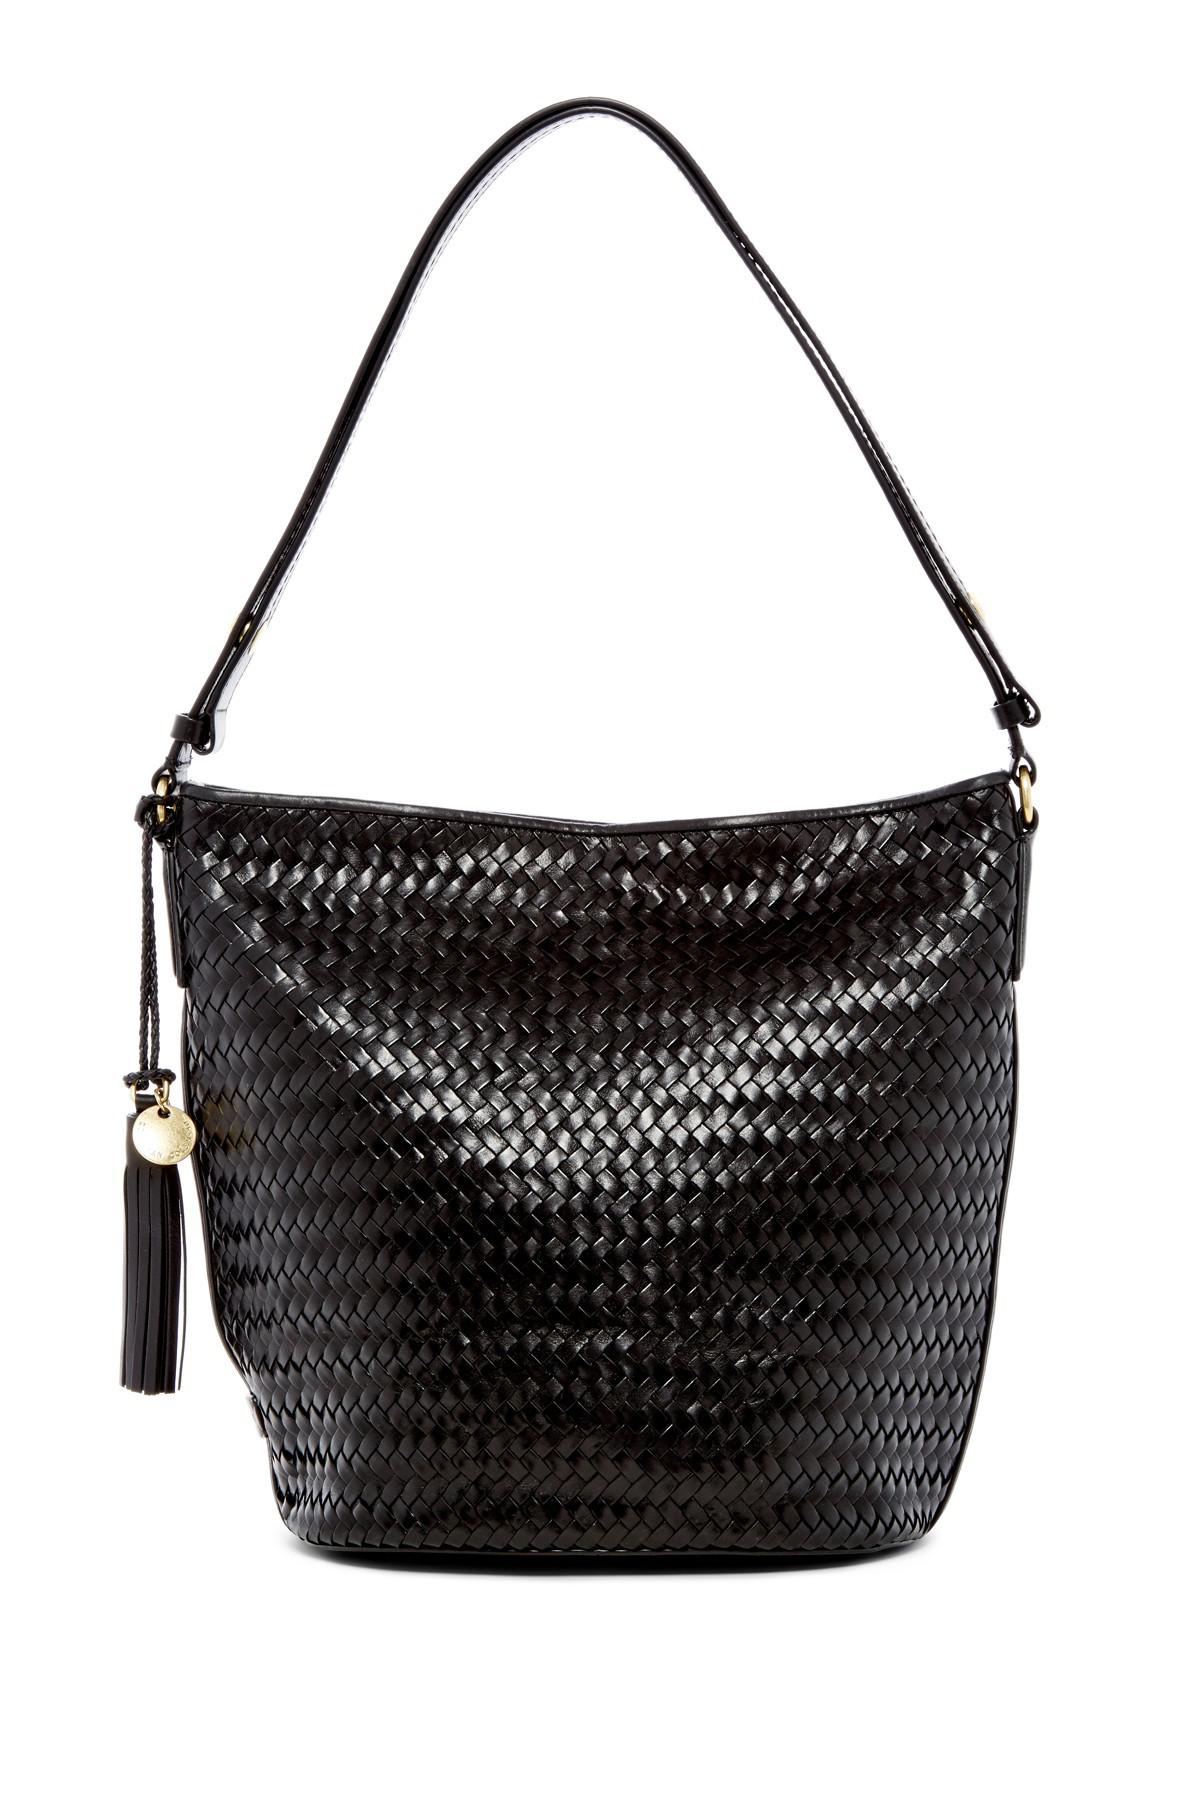 Lyst - Cole Haan Celia Woven Leather Bucket Bag in Black